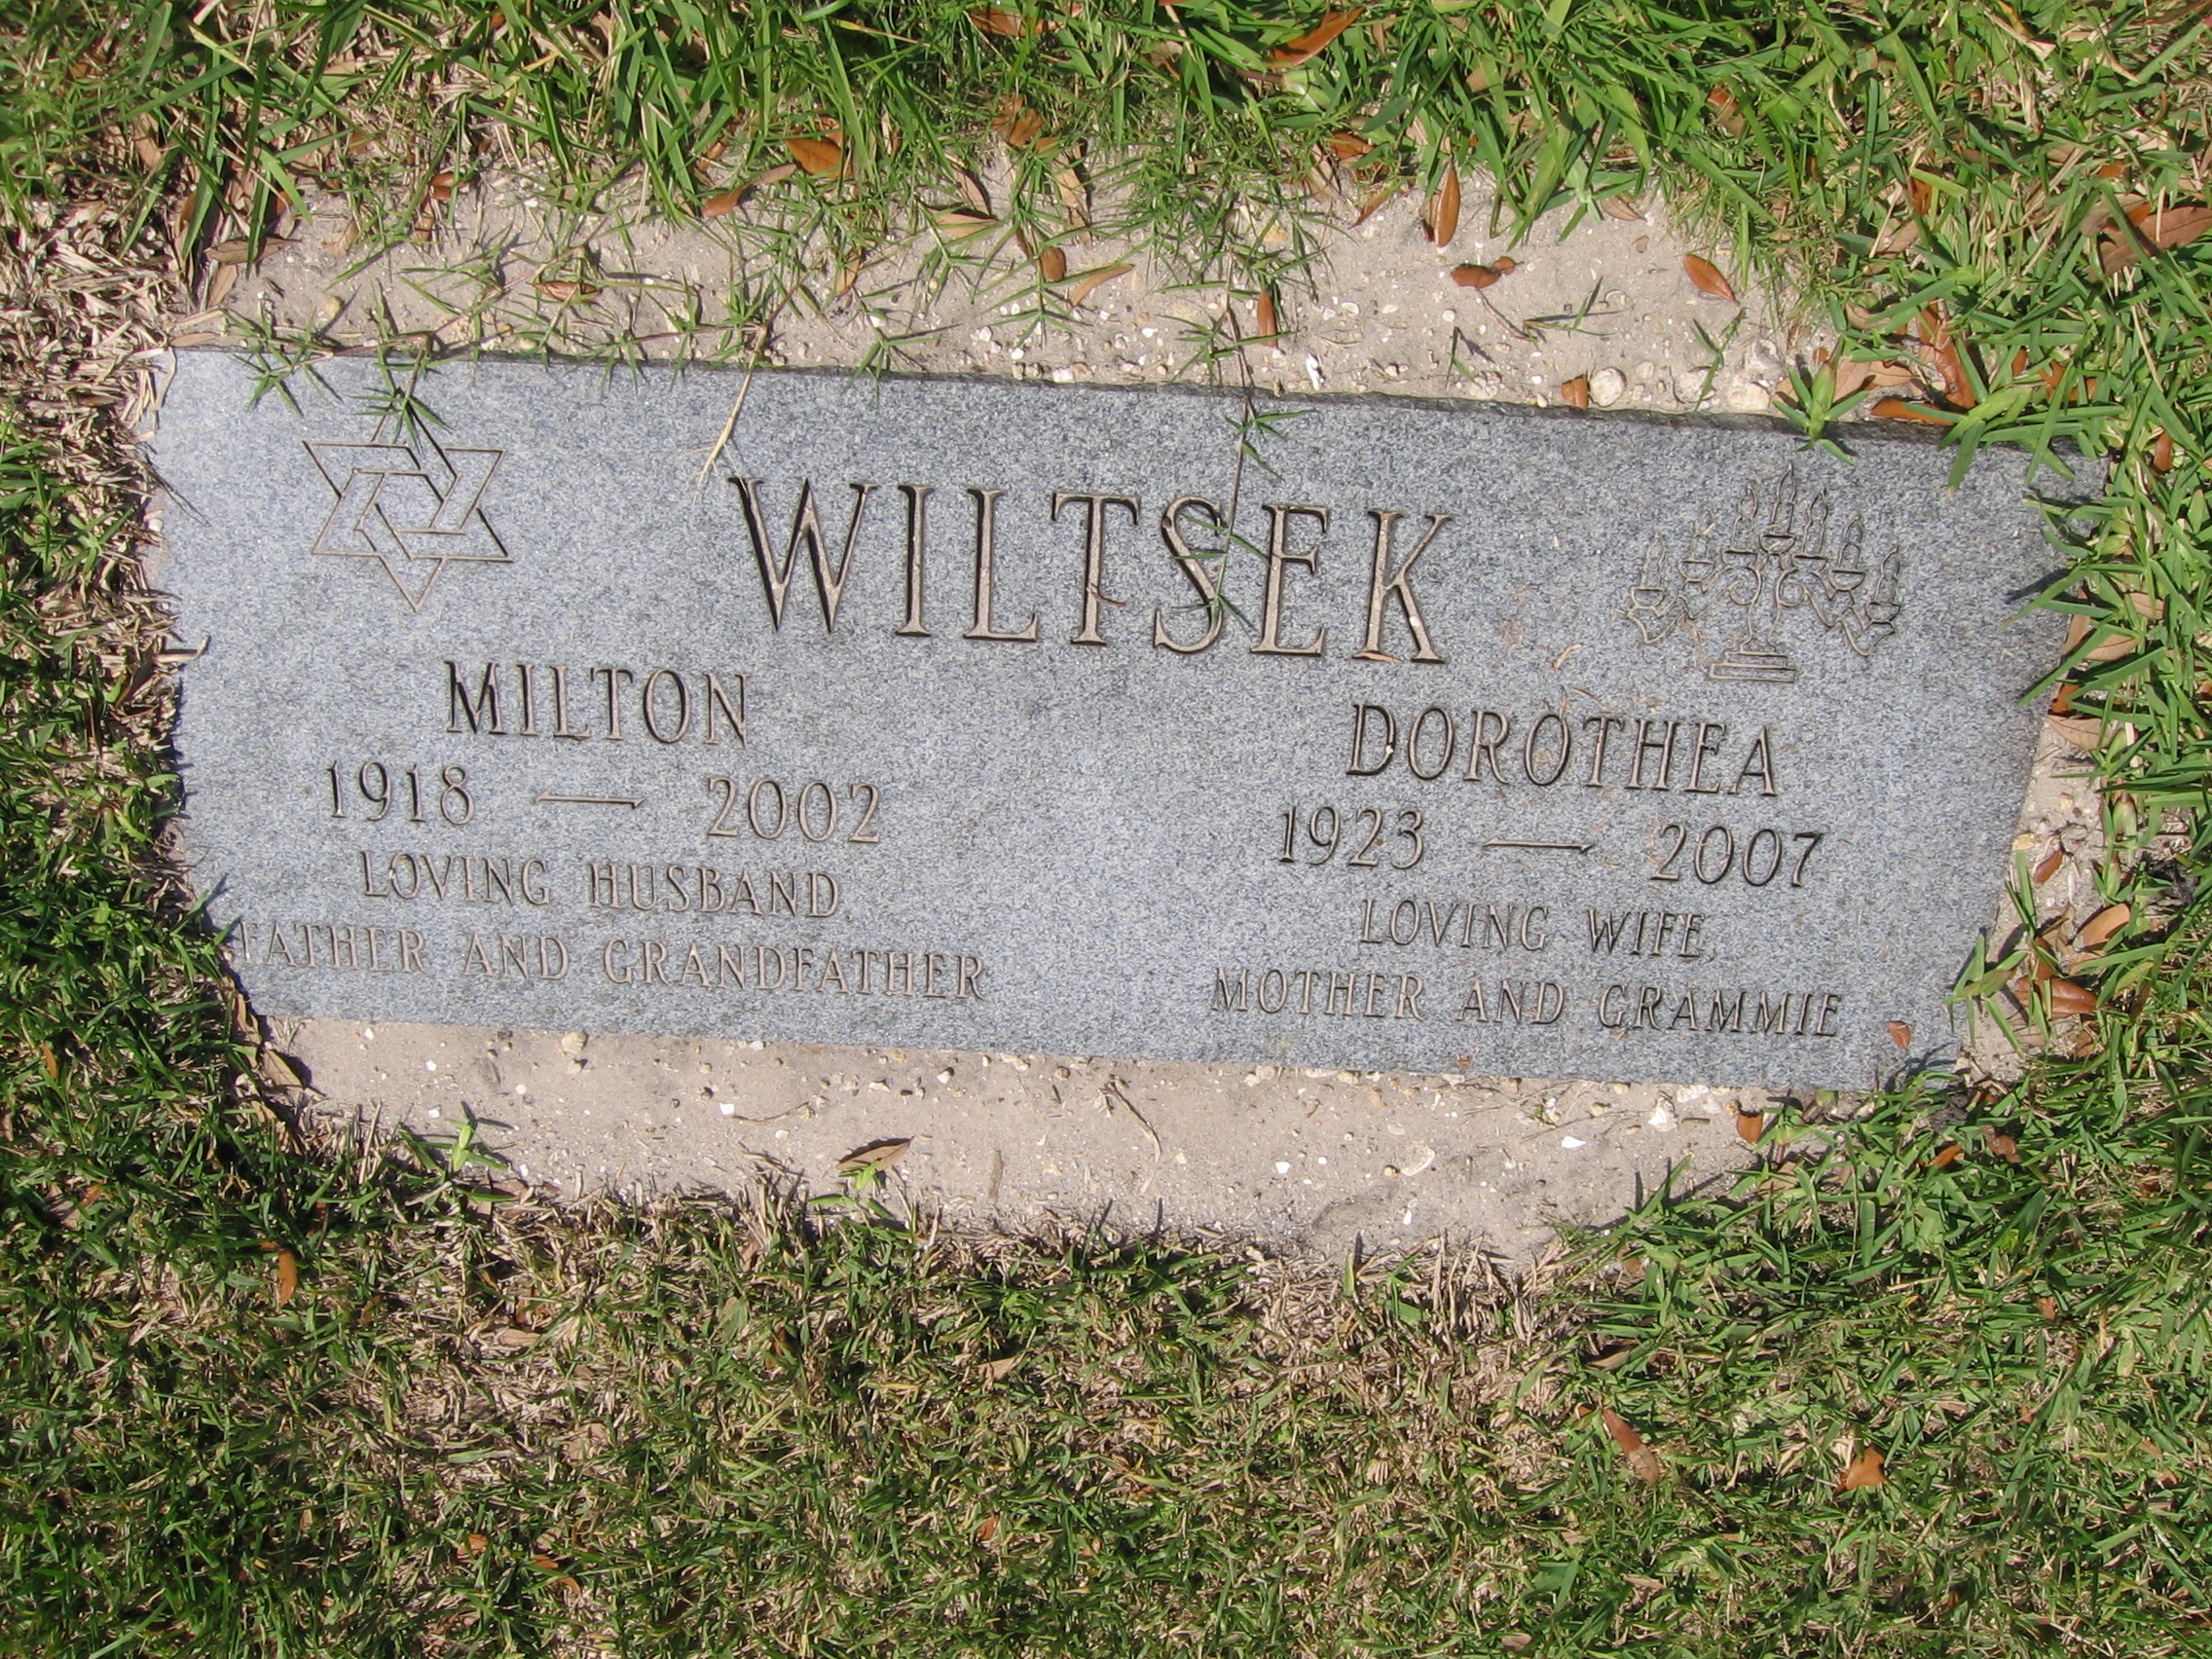 Milton Wiltsek